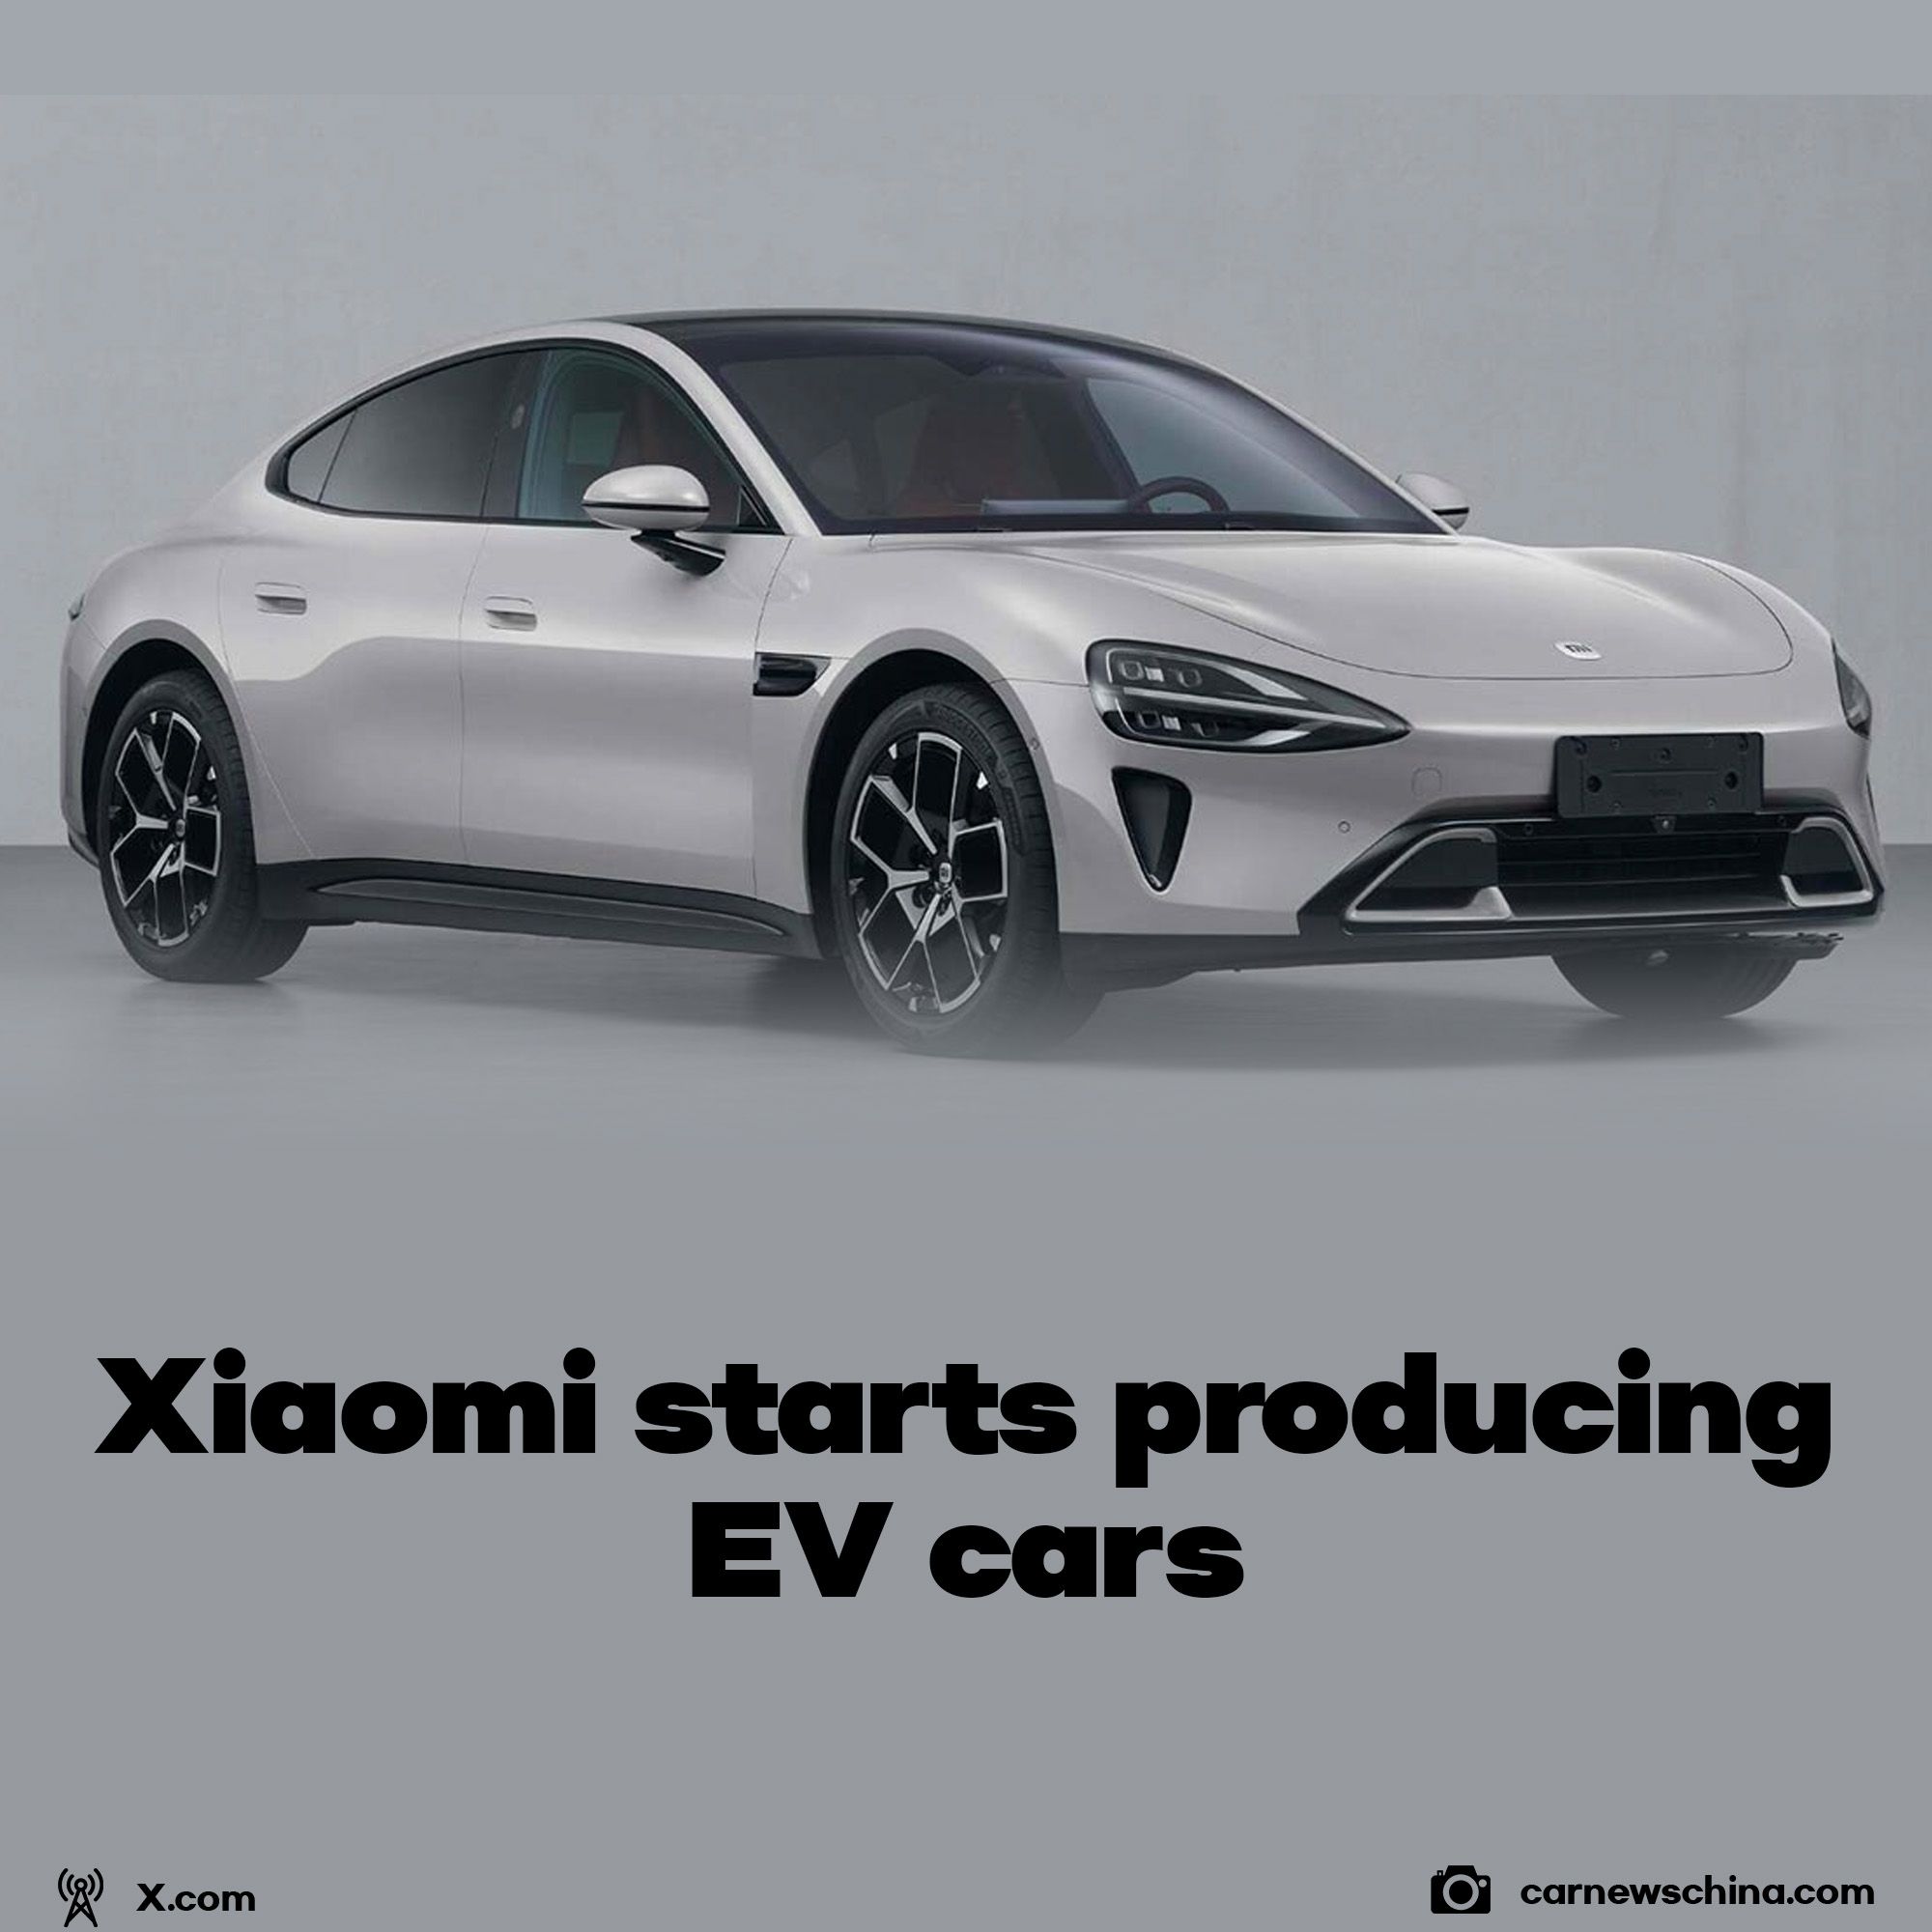 Xiaomi starts producing EV cars